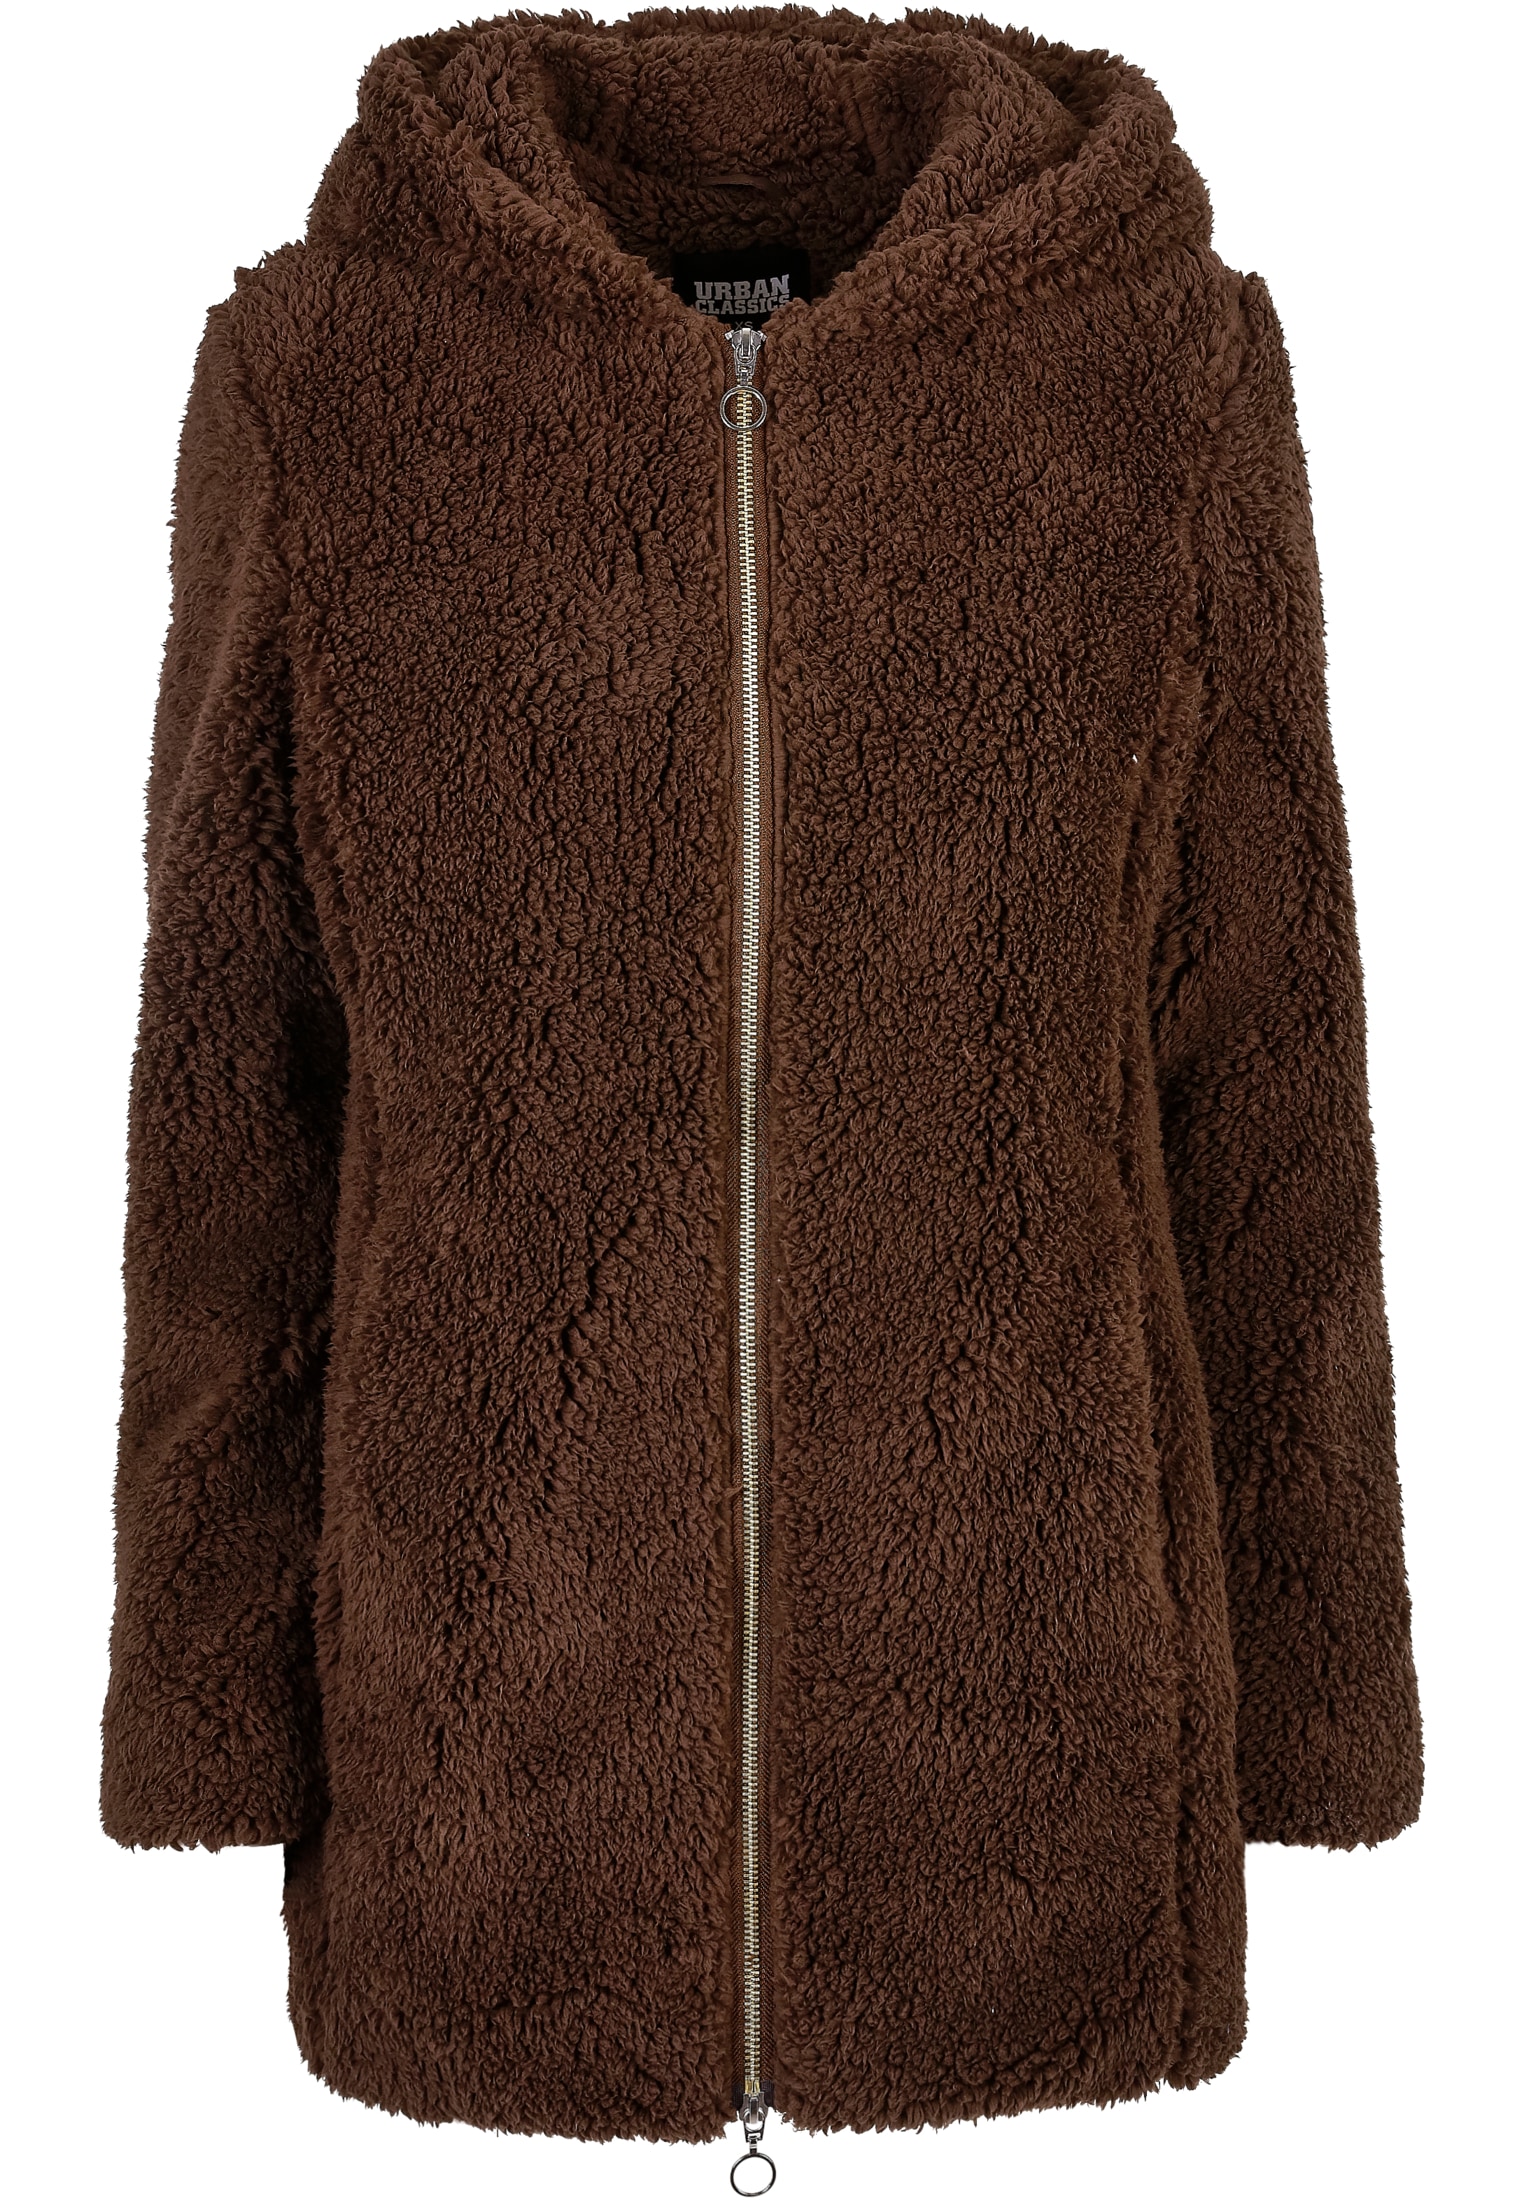 URBAN CLASSICS (1 »Damen Ladies Outdoorjacke kaufen Jacket«, Kapuze ohne St.), Sherpa